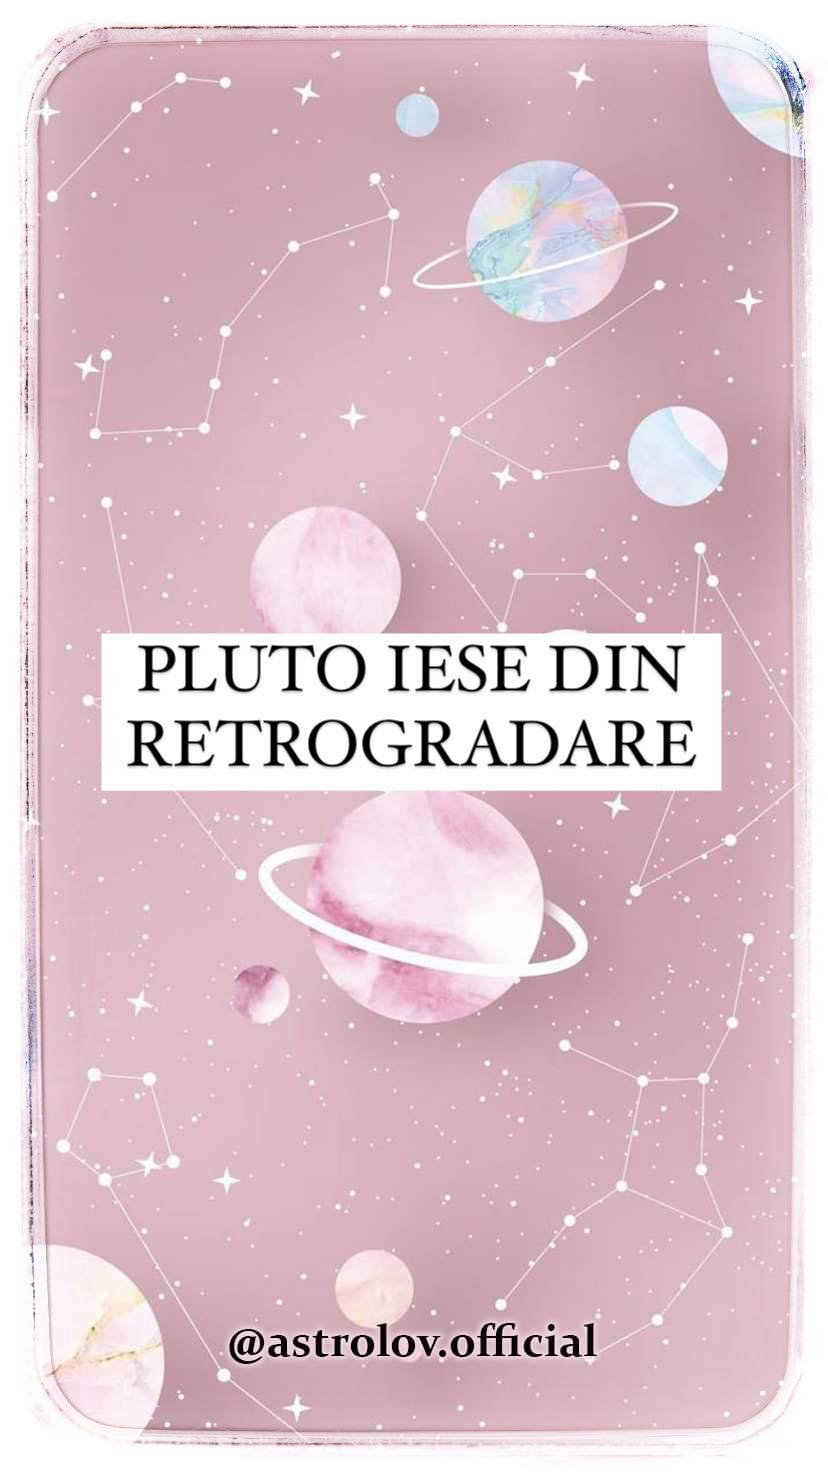 Pluto iese din retrogradare